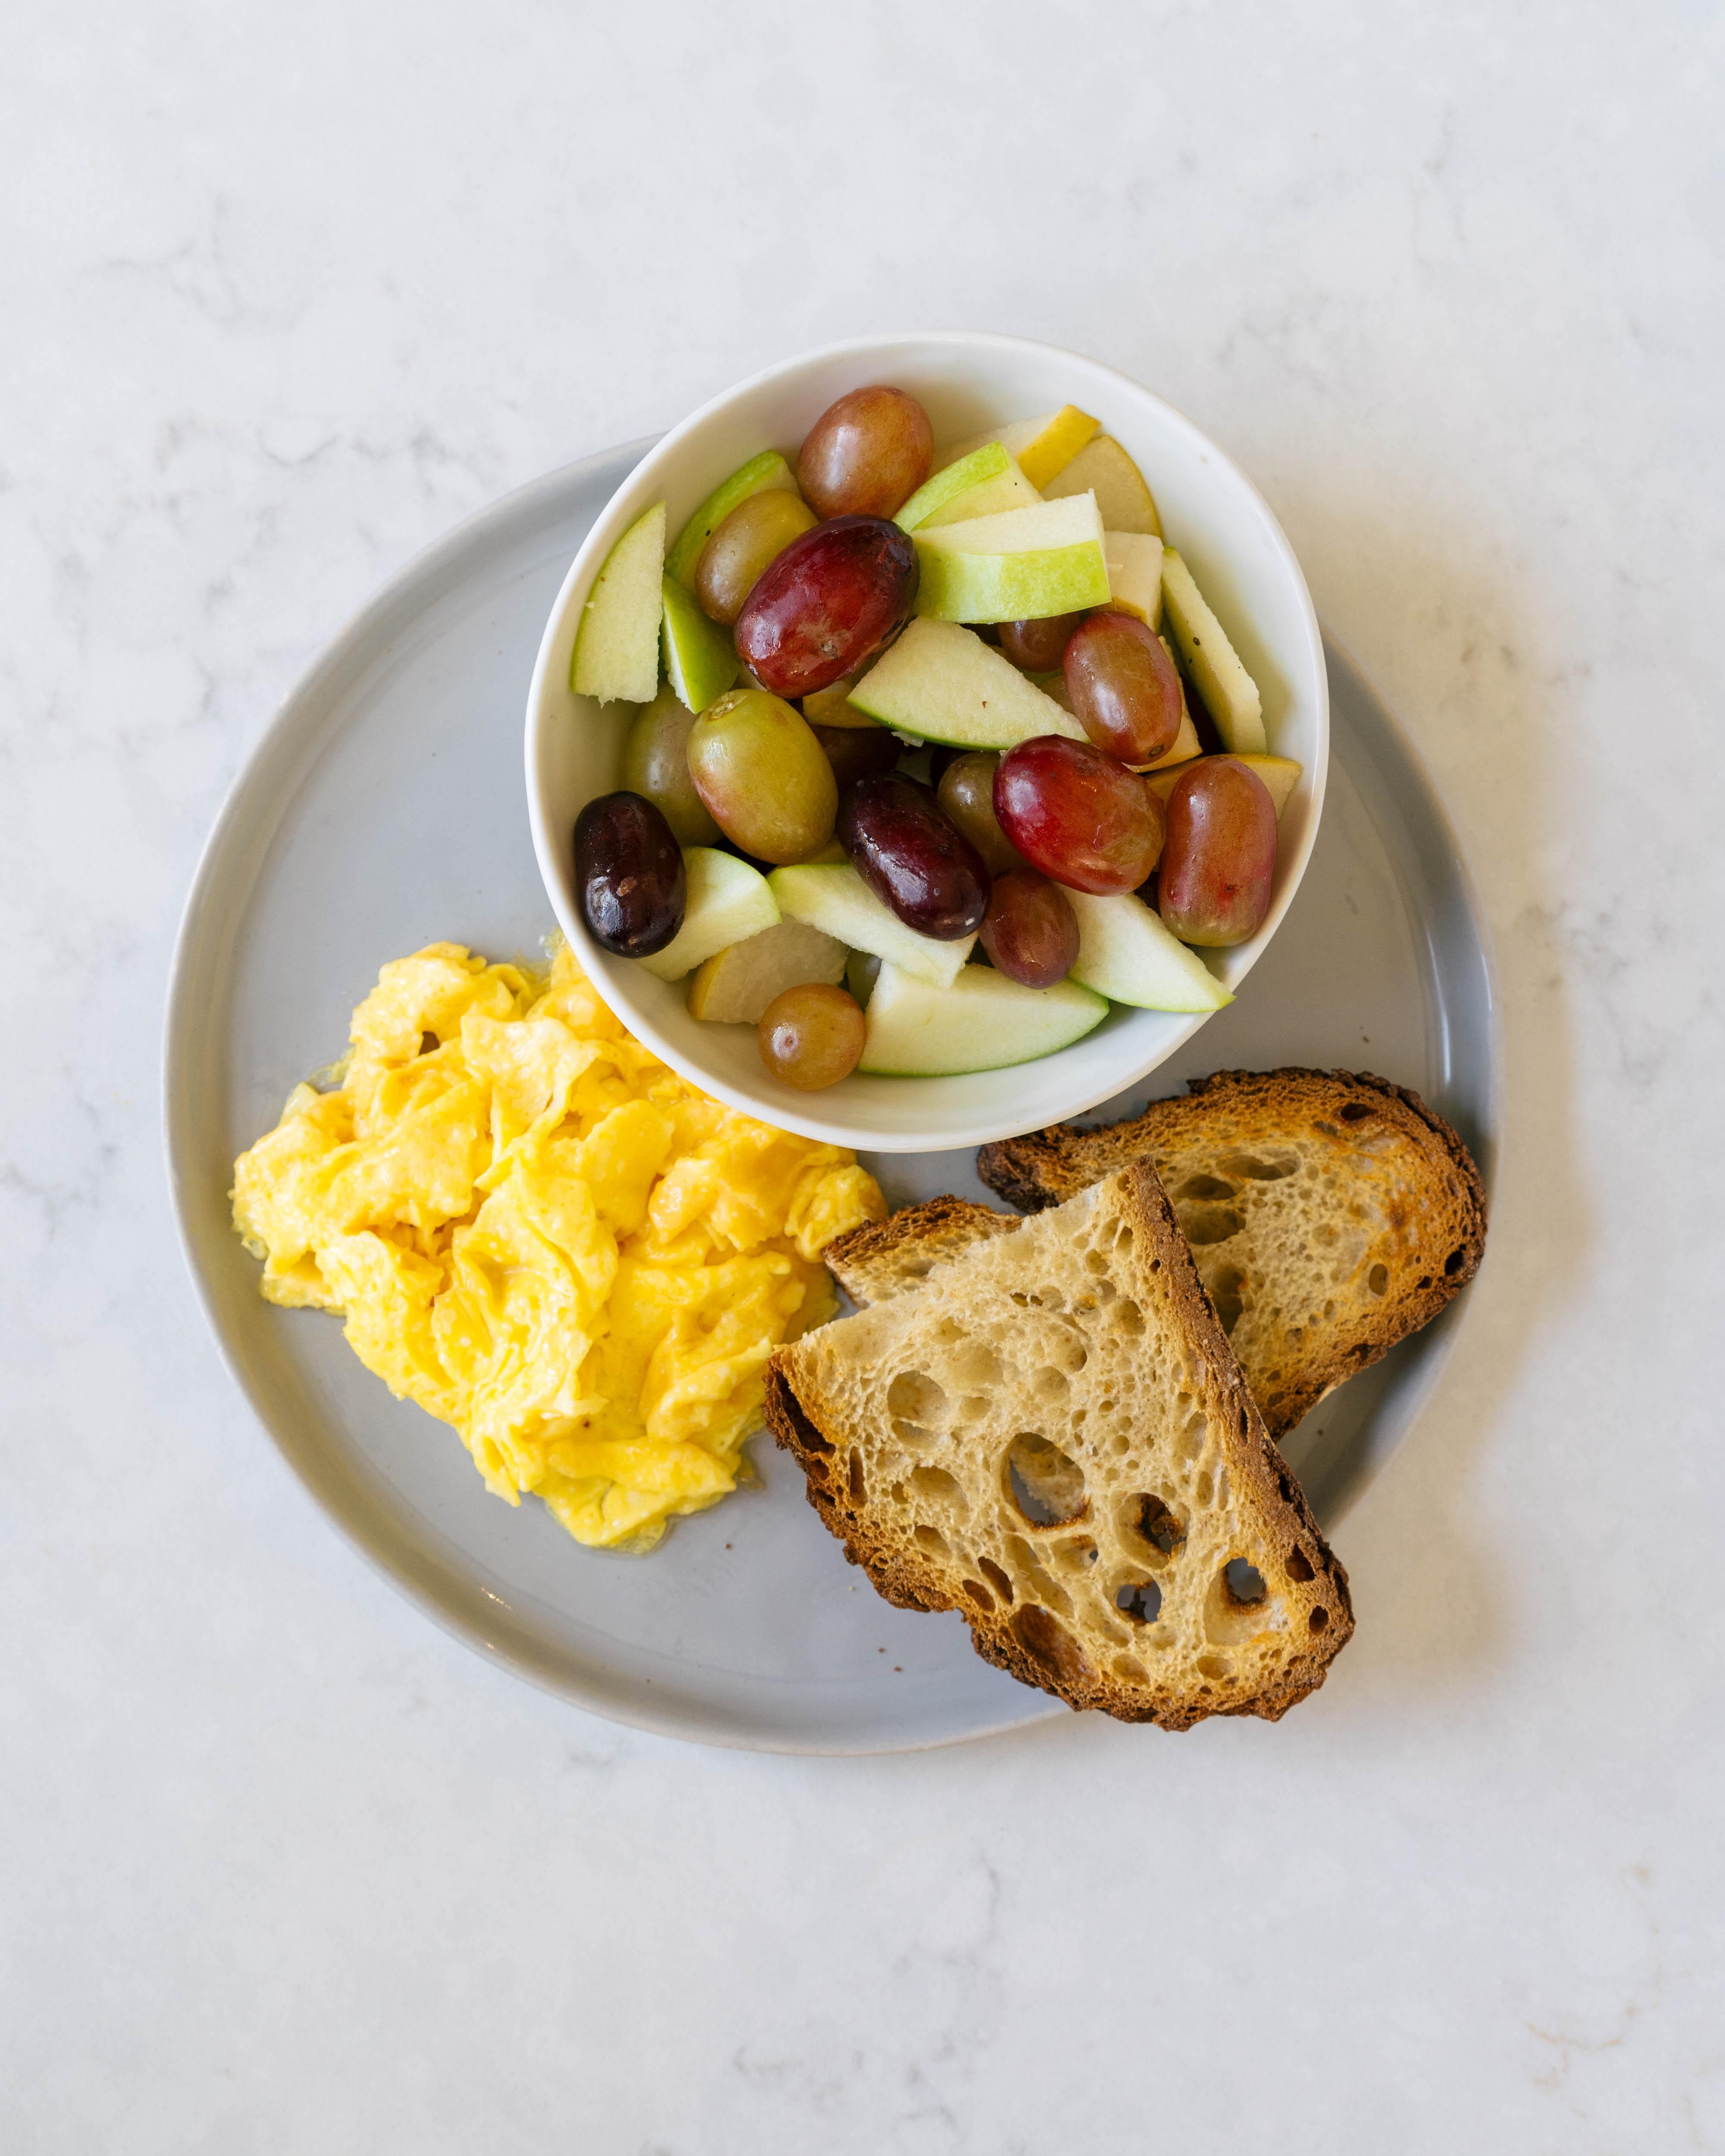 Scrambled egg, toast, and fruit